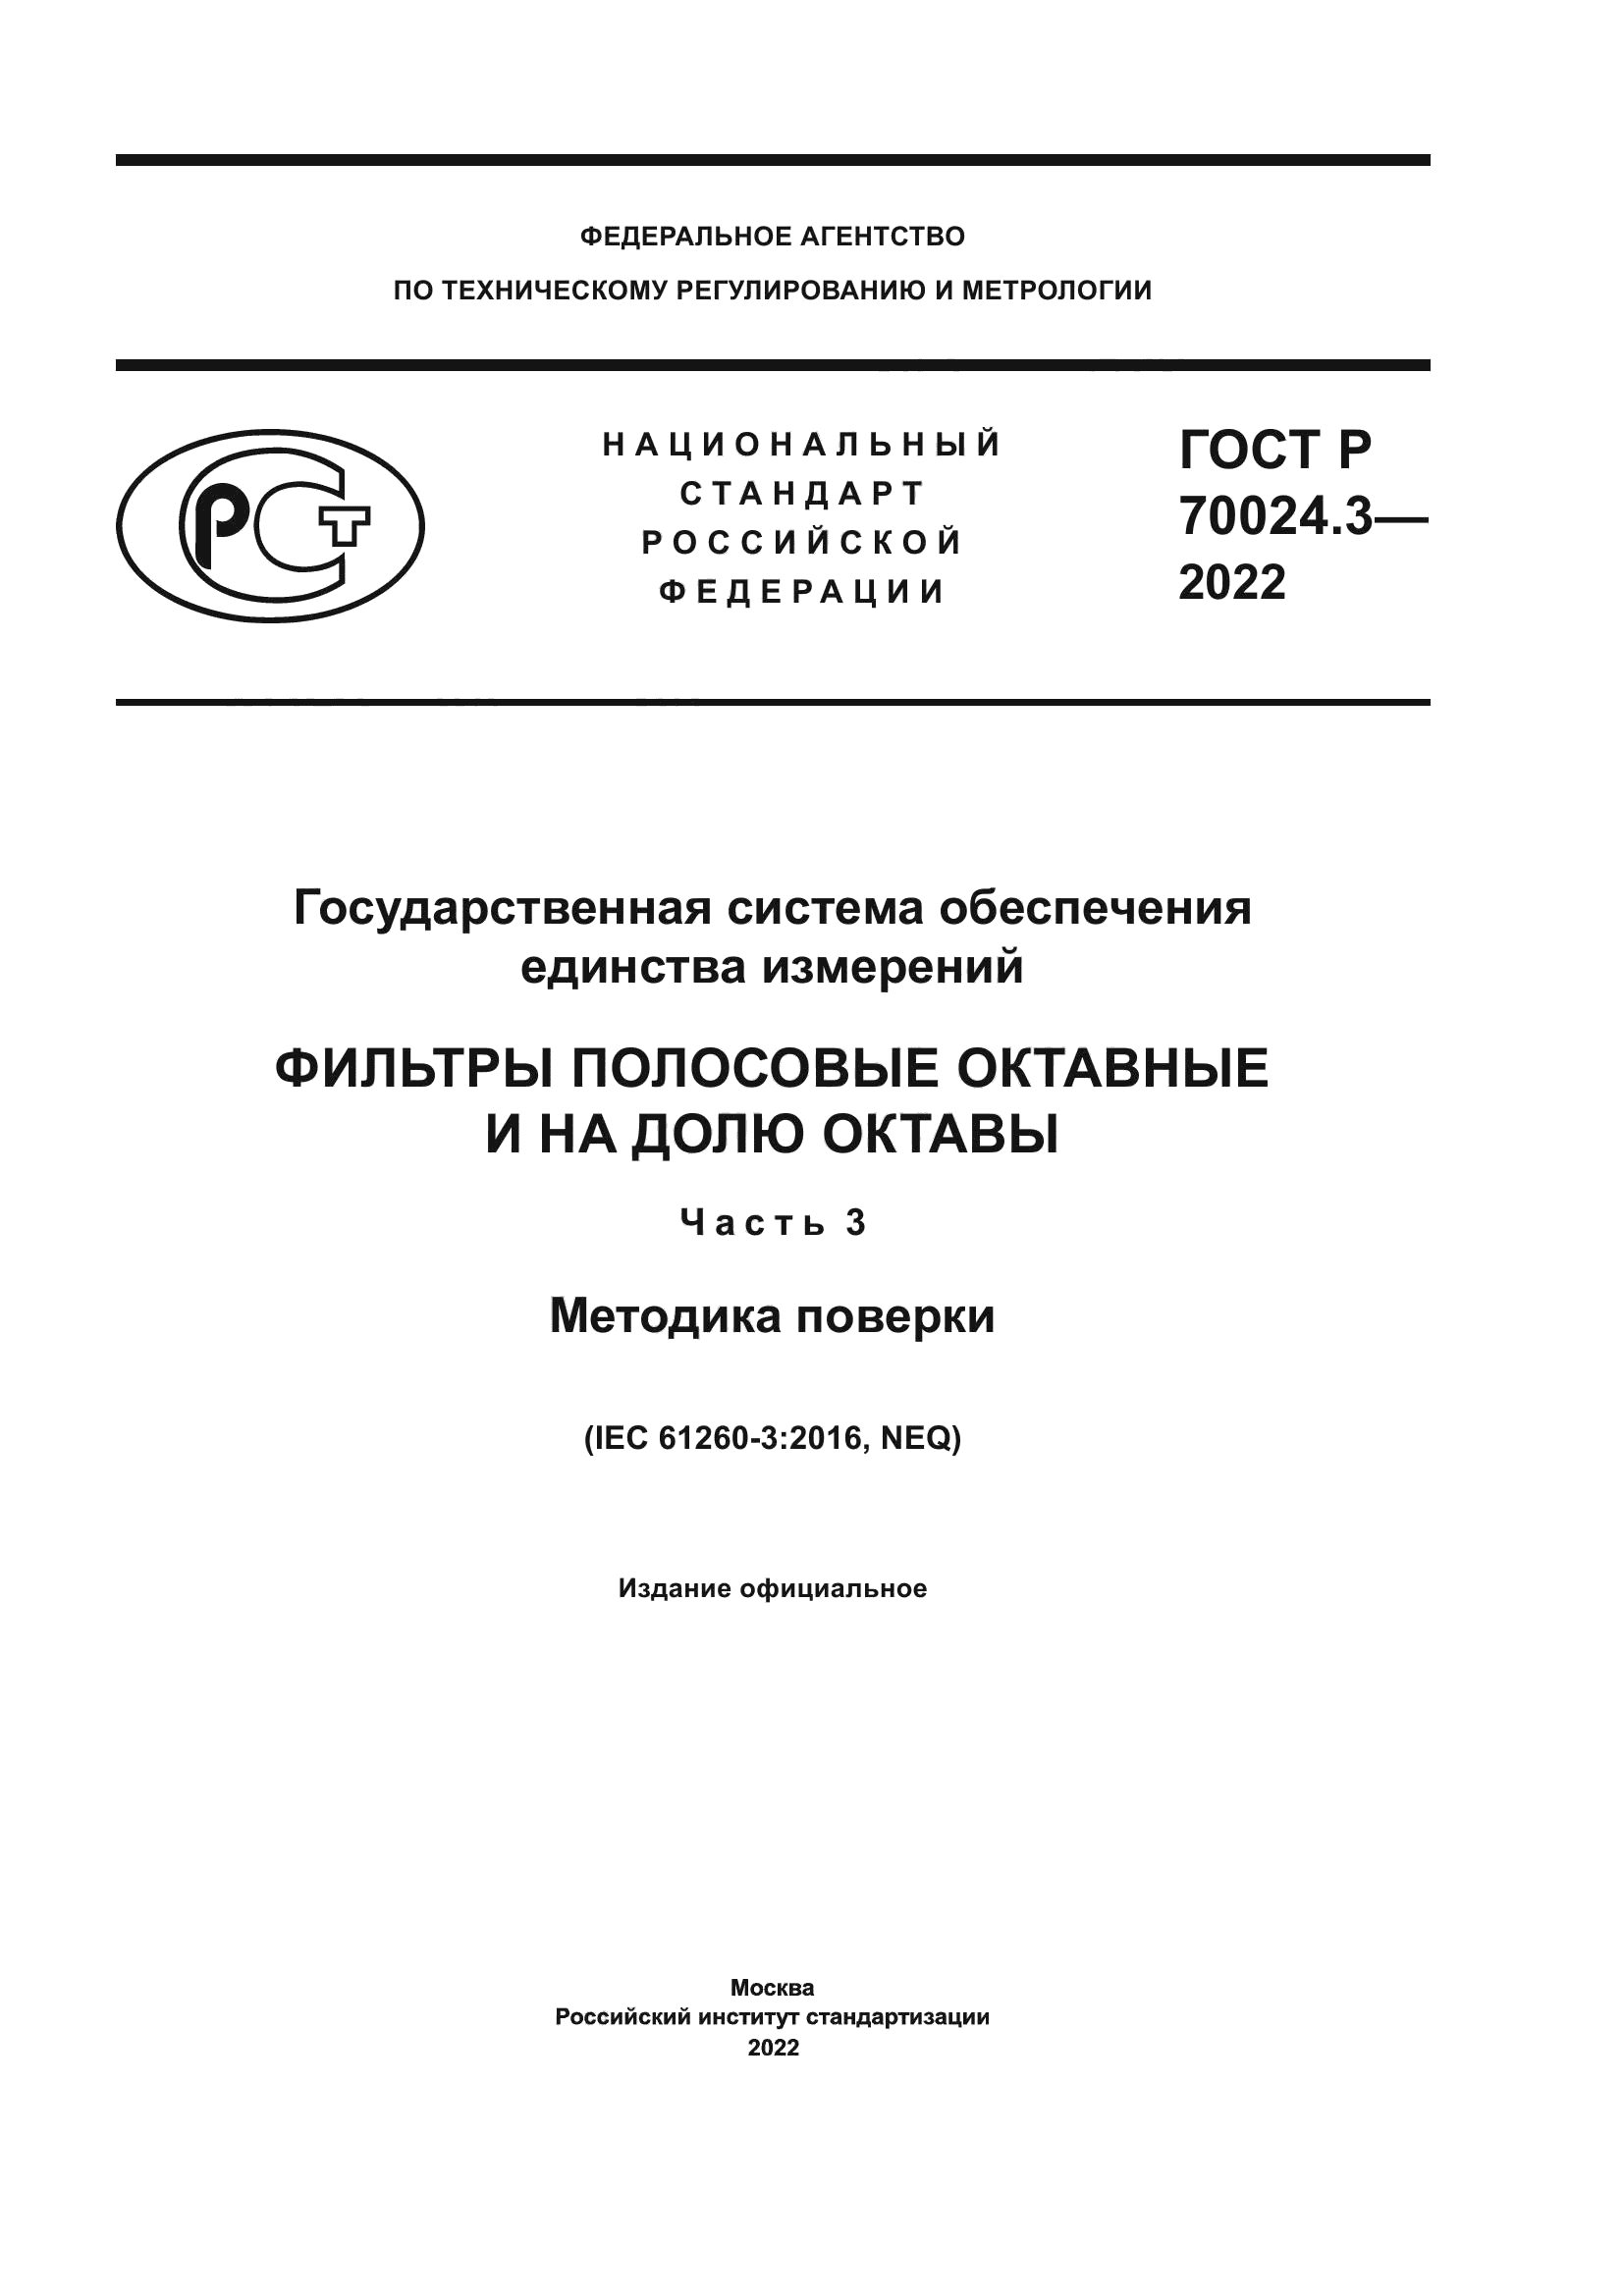 ГОСТ Р 70024.3-2022